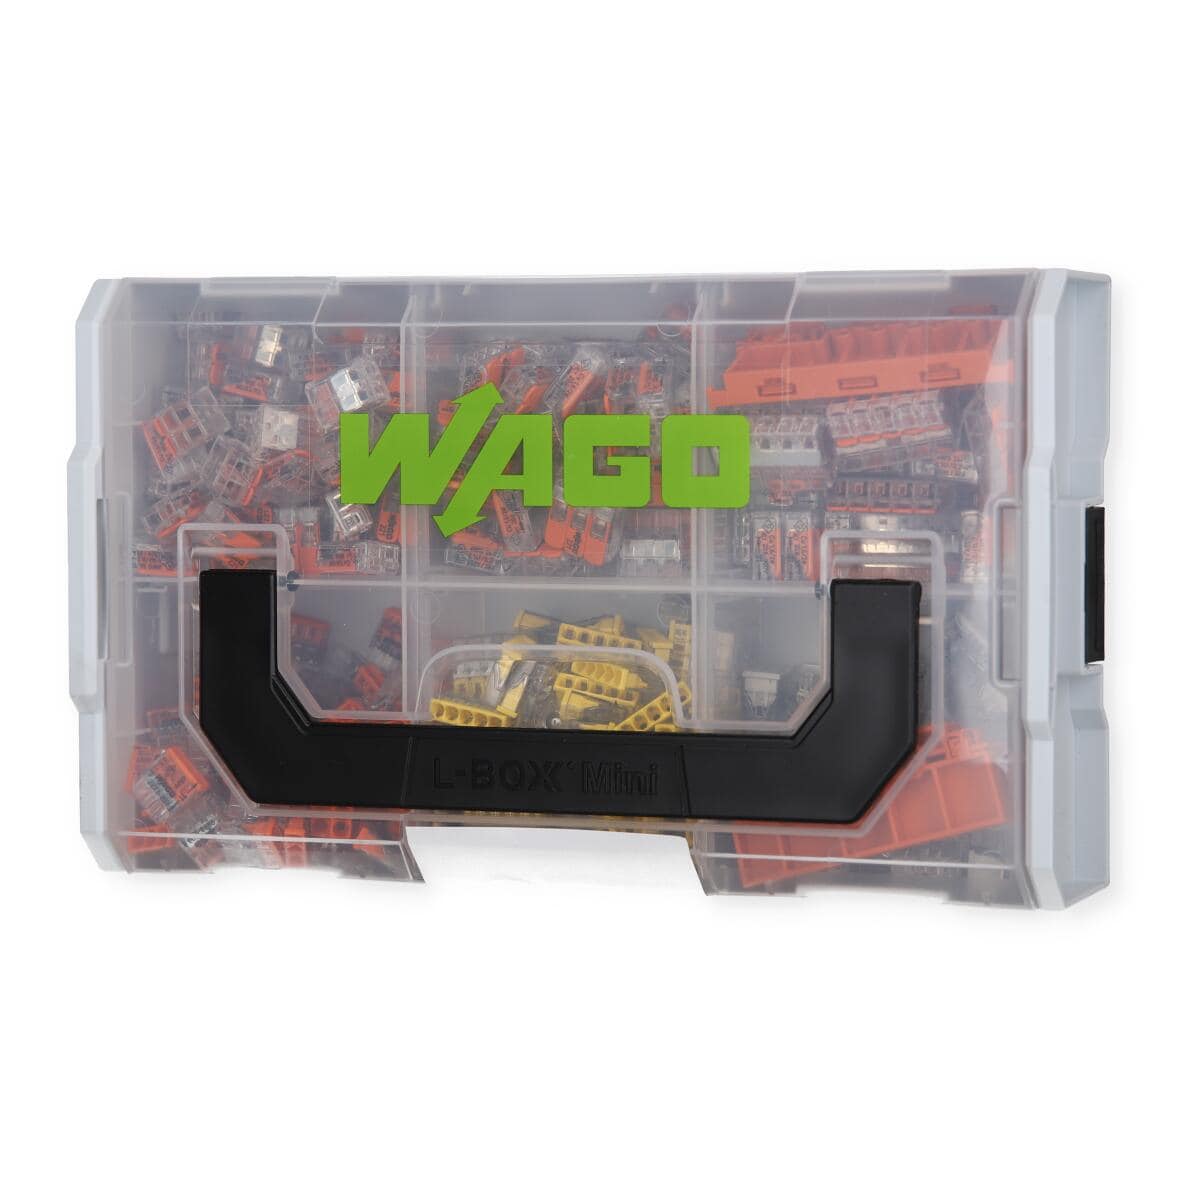 WAGO 887-950: WAGO Klemmen-Sortimentsbox - L-Boxx Mini bei